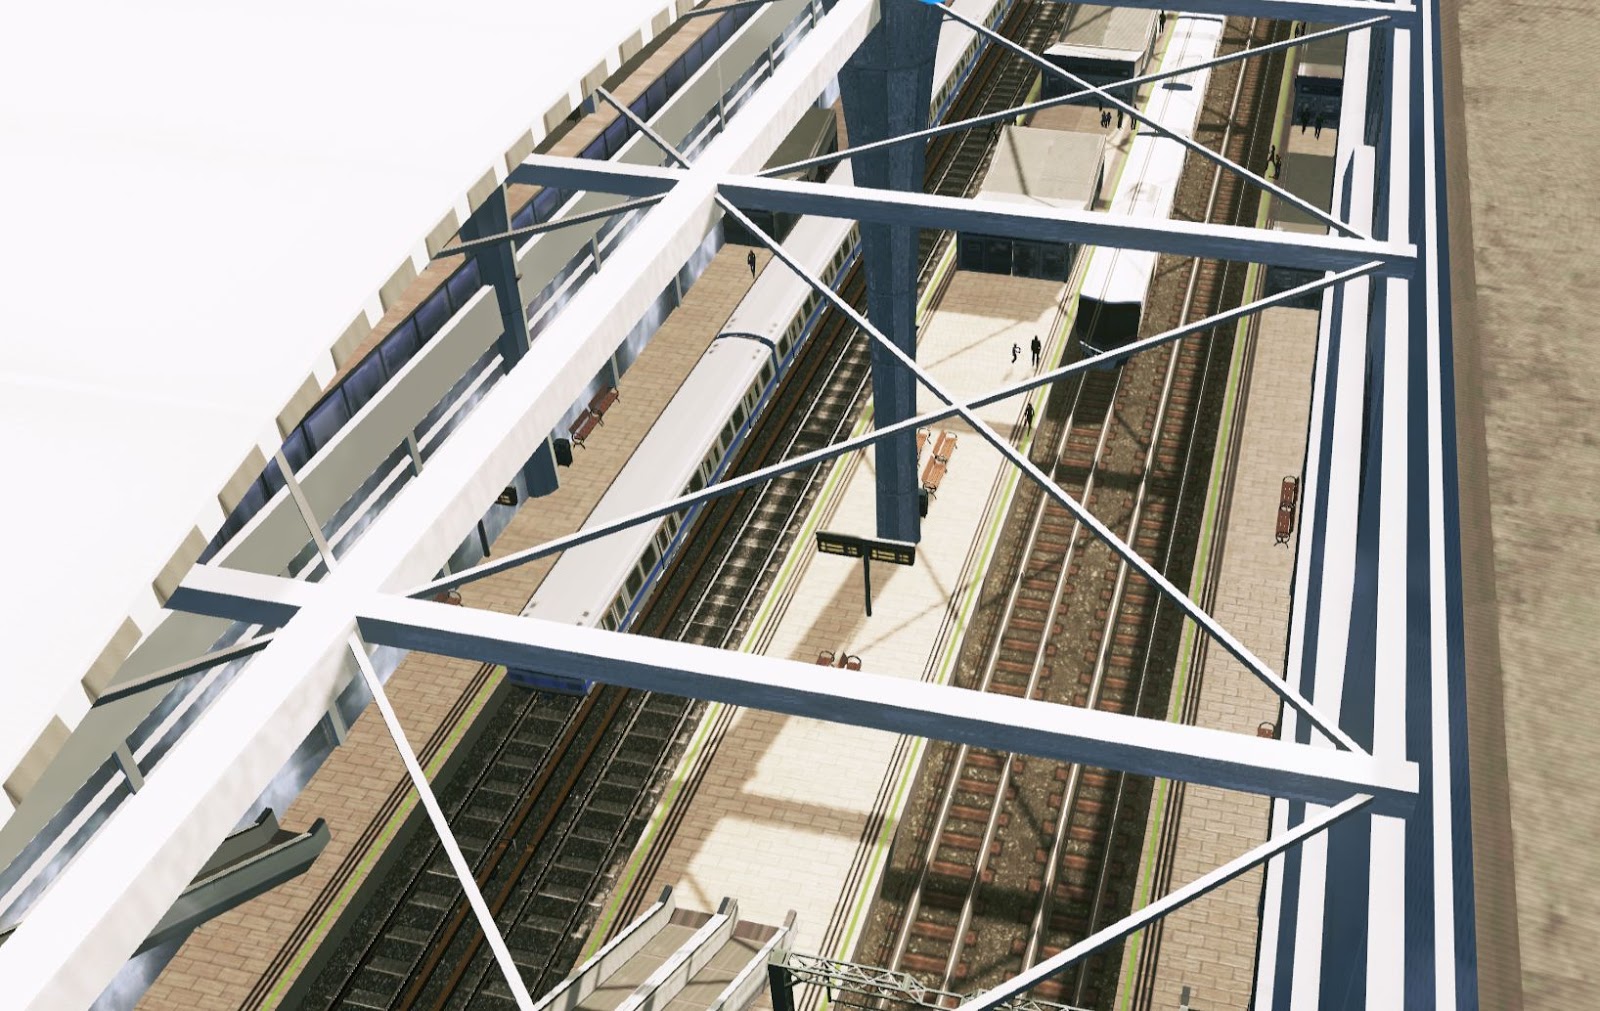 Cities Skylines Mod導入ガイド 路面電車 地下鉄 地上 地上鉄道用など複数種ホームのある駅を建設する